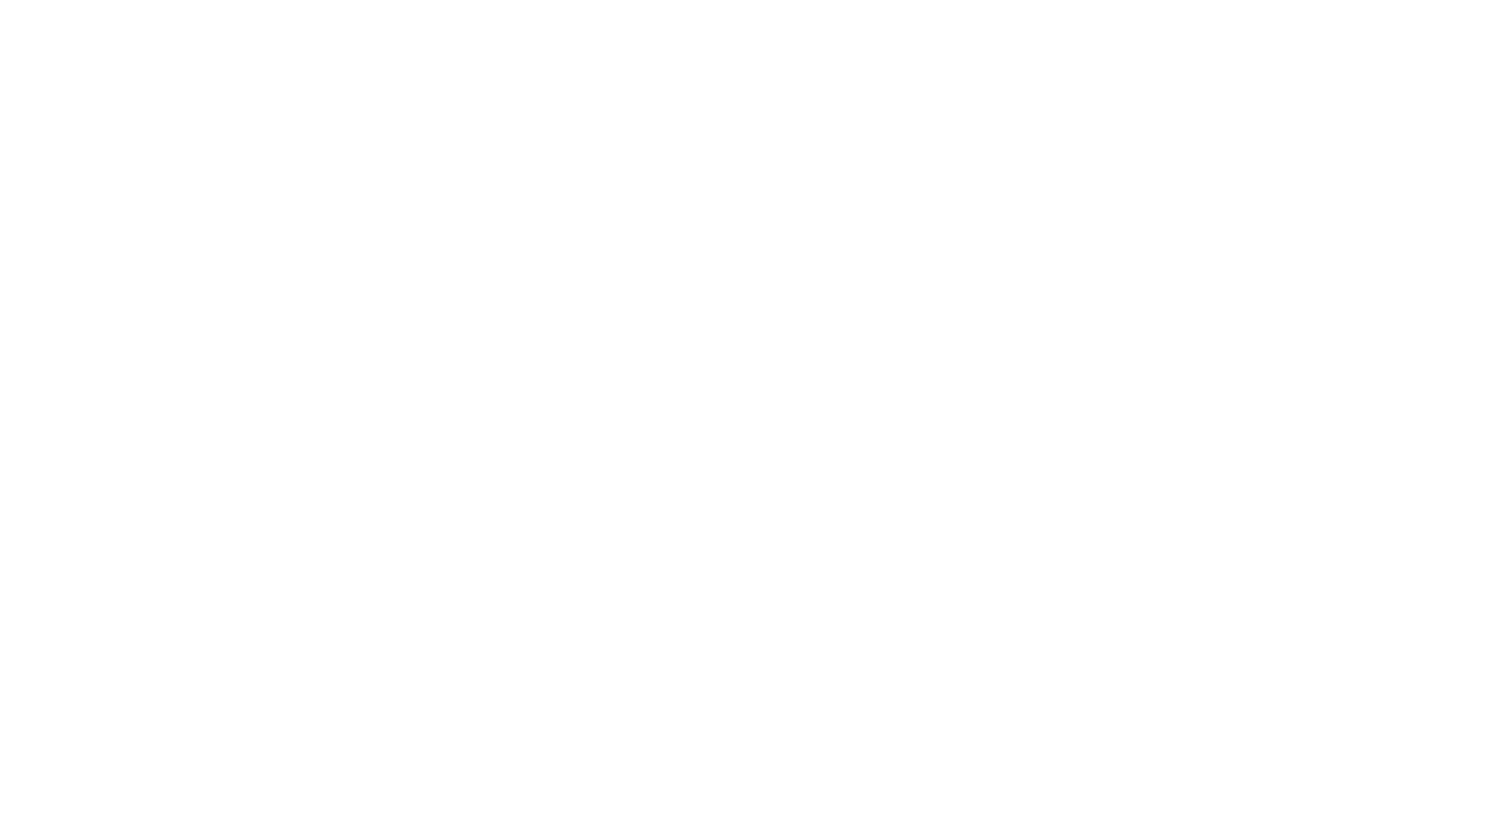 Nobel Insurance Services